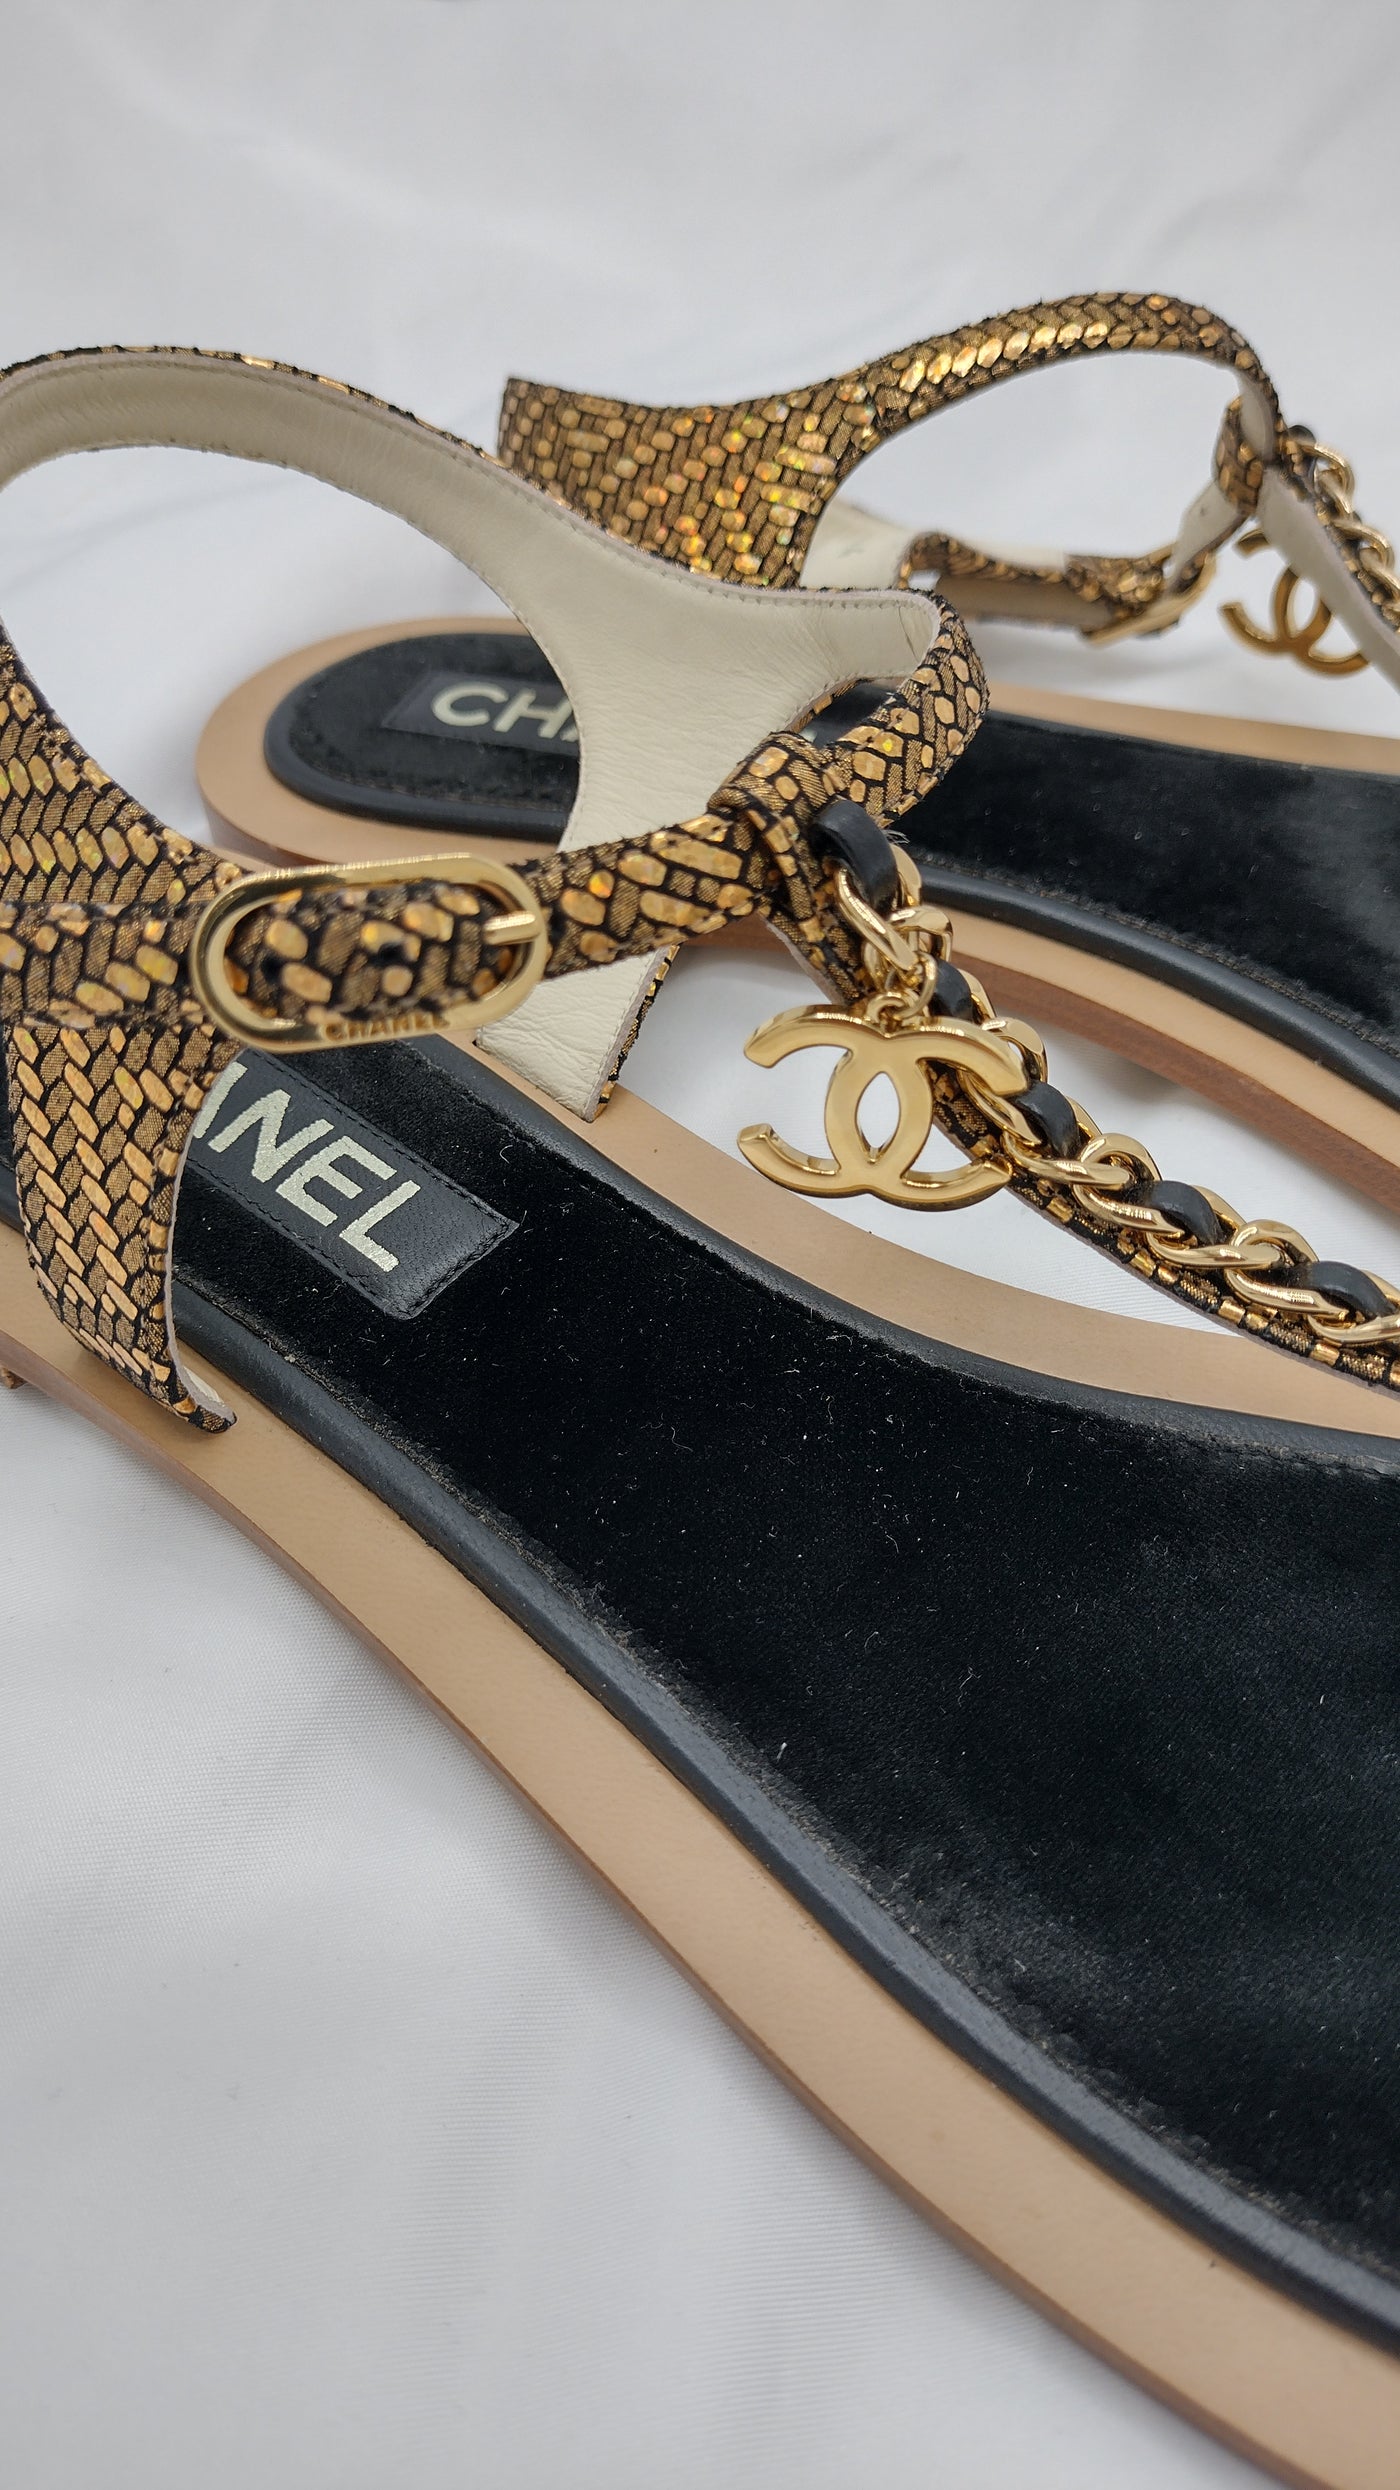 CHANEL sandals cc gold interlock chain and velvet size 40.5 never worn